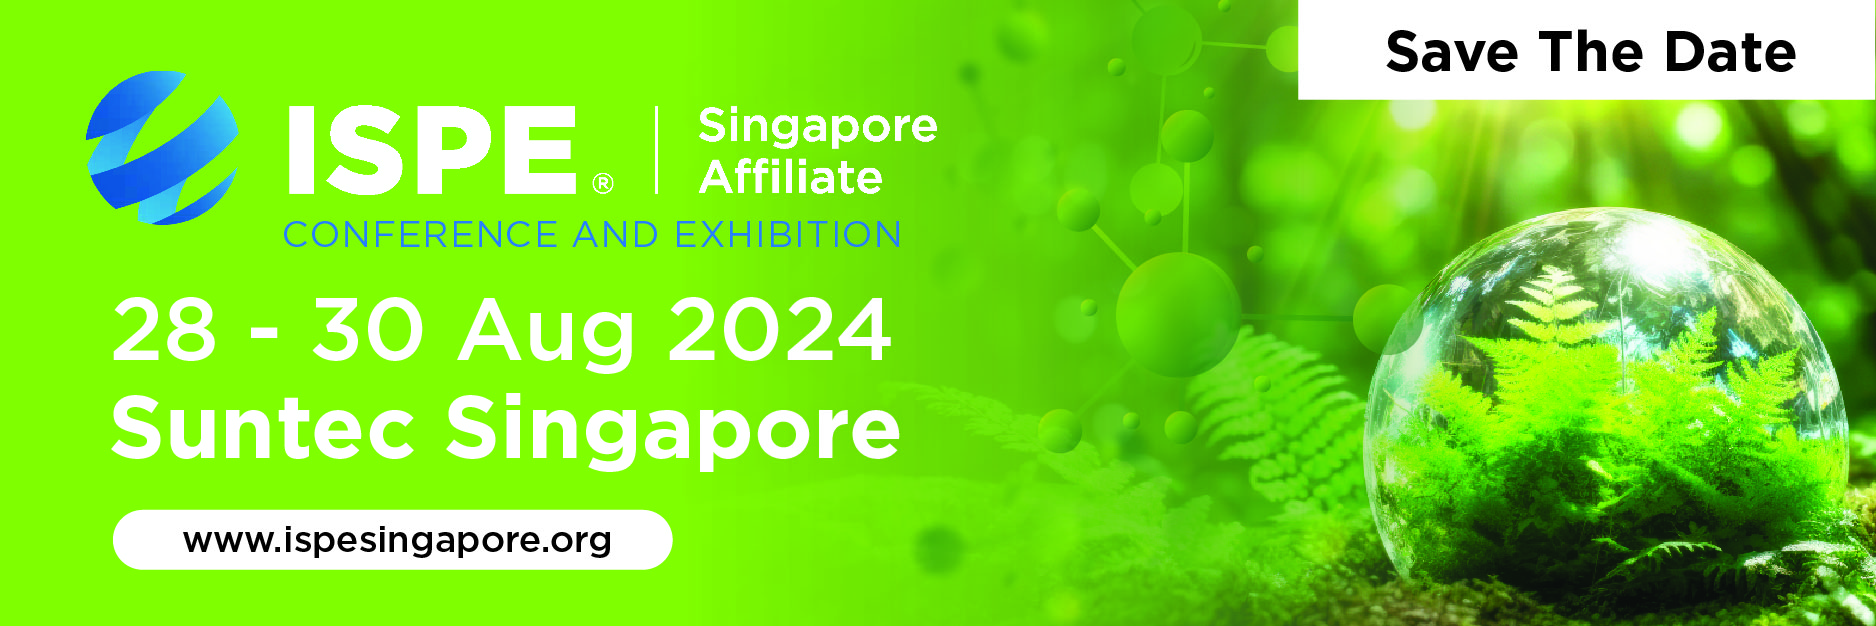 ISPE Singapore Conference & Exhibition 2024 Singapore Affiliate